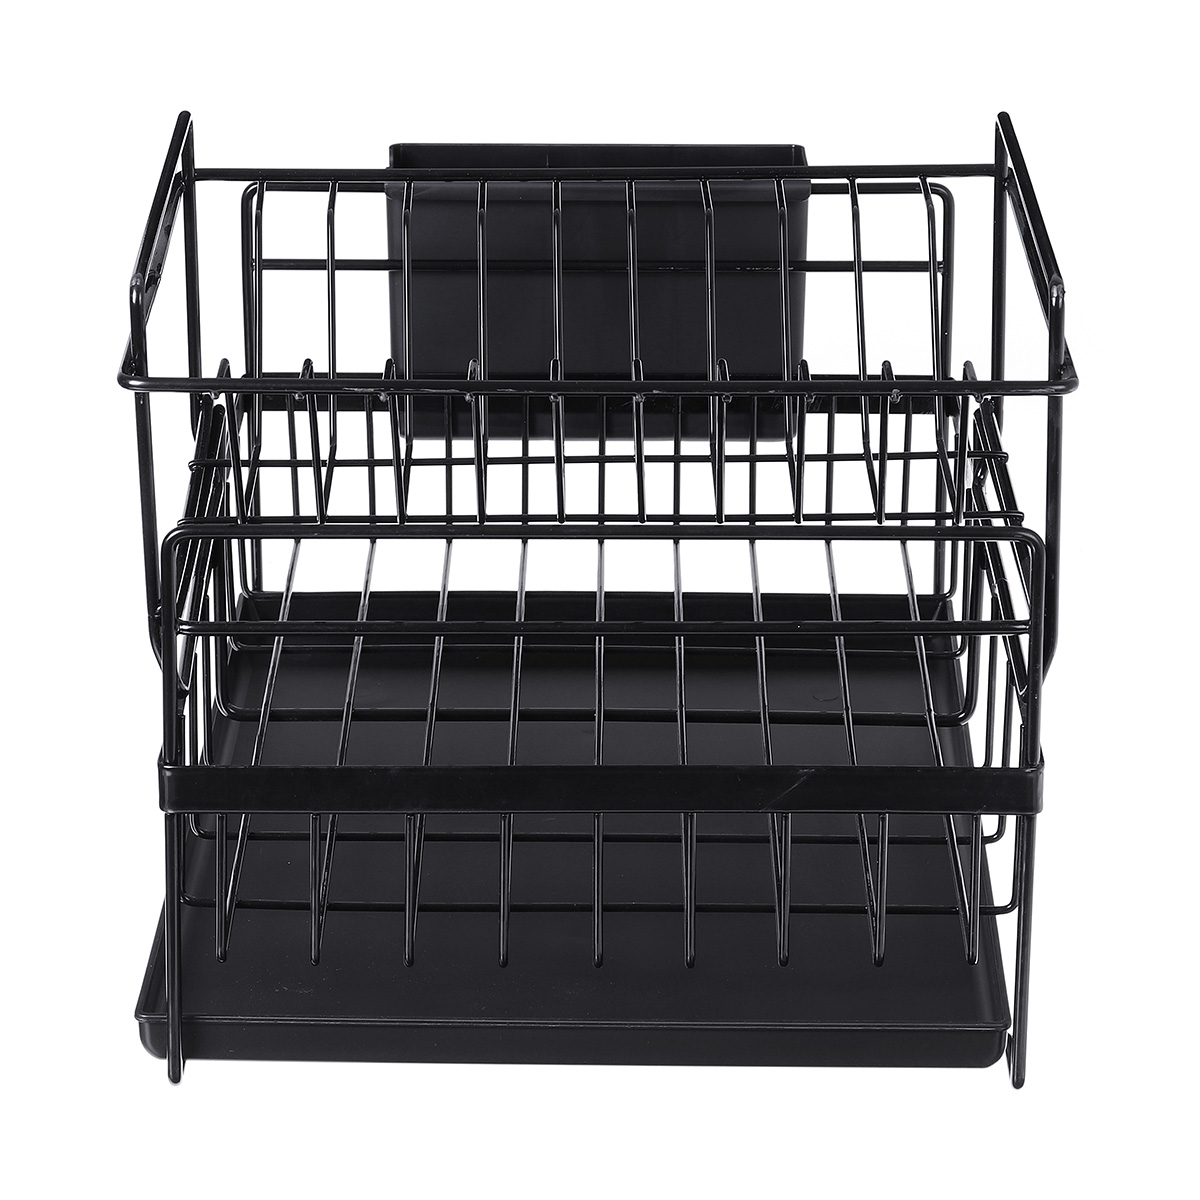 Metal-Multi-Layer-Dish-Rack-Drainer-Drying-Dish-Tray-Holder-Kitchen-Organizer-Home-Kitchener-Storage-1768546-17